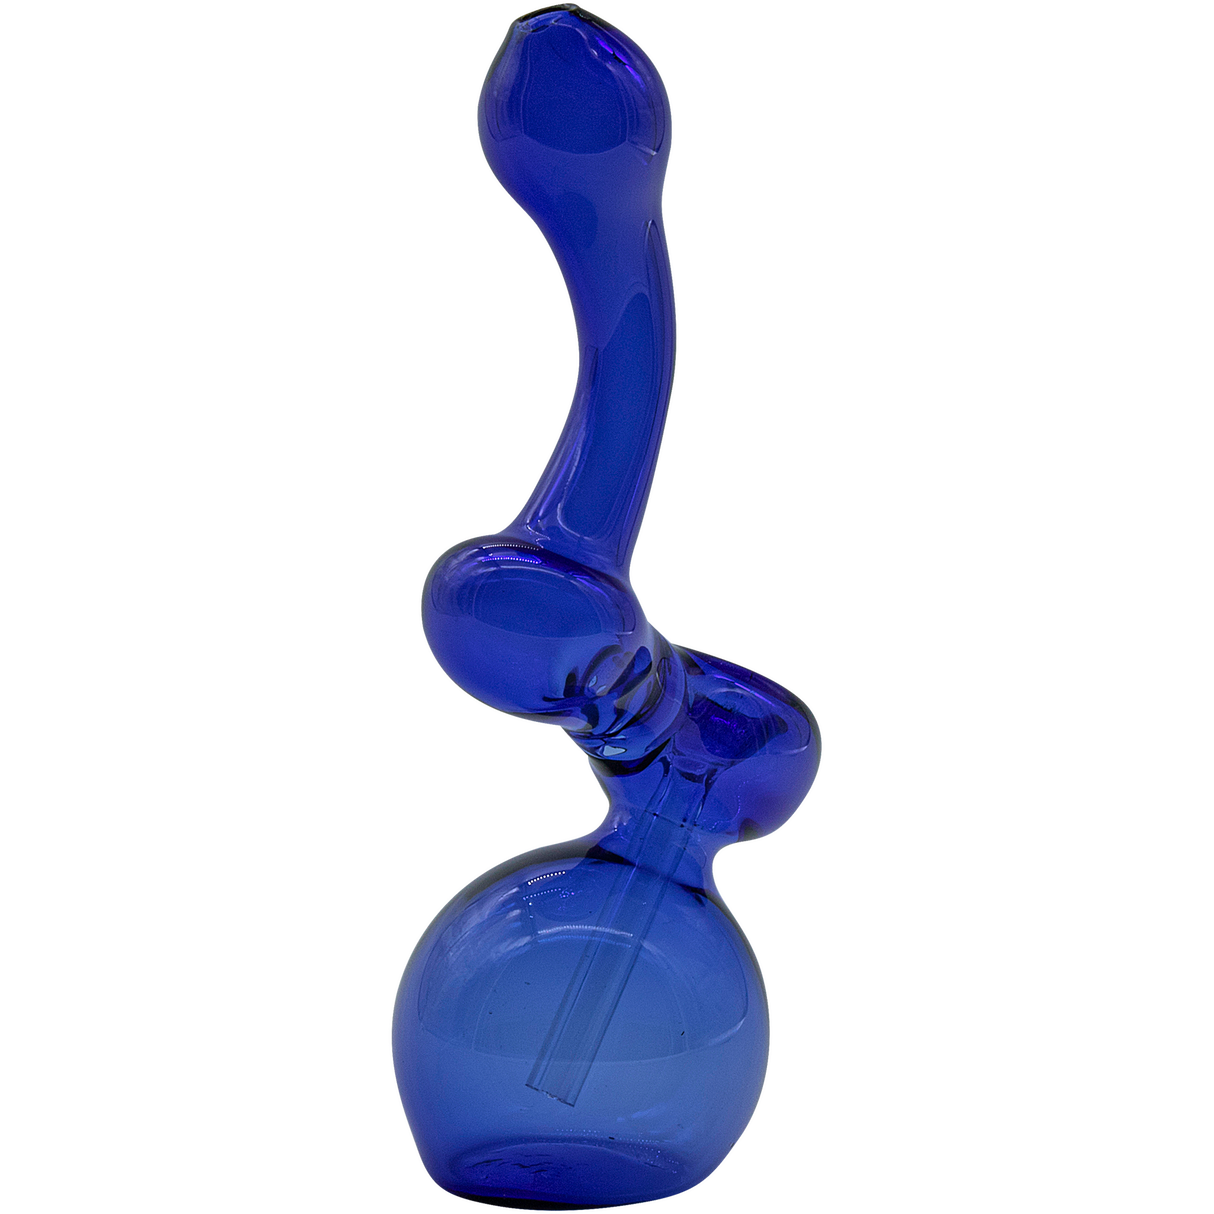 LA Pipes "Sherbub" Glass Sherlock Bubbler Pipe in blue, 6" height, borosilicate, USA made